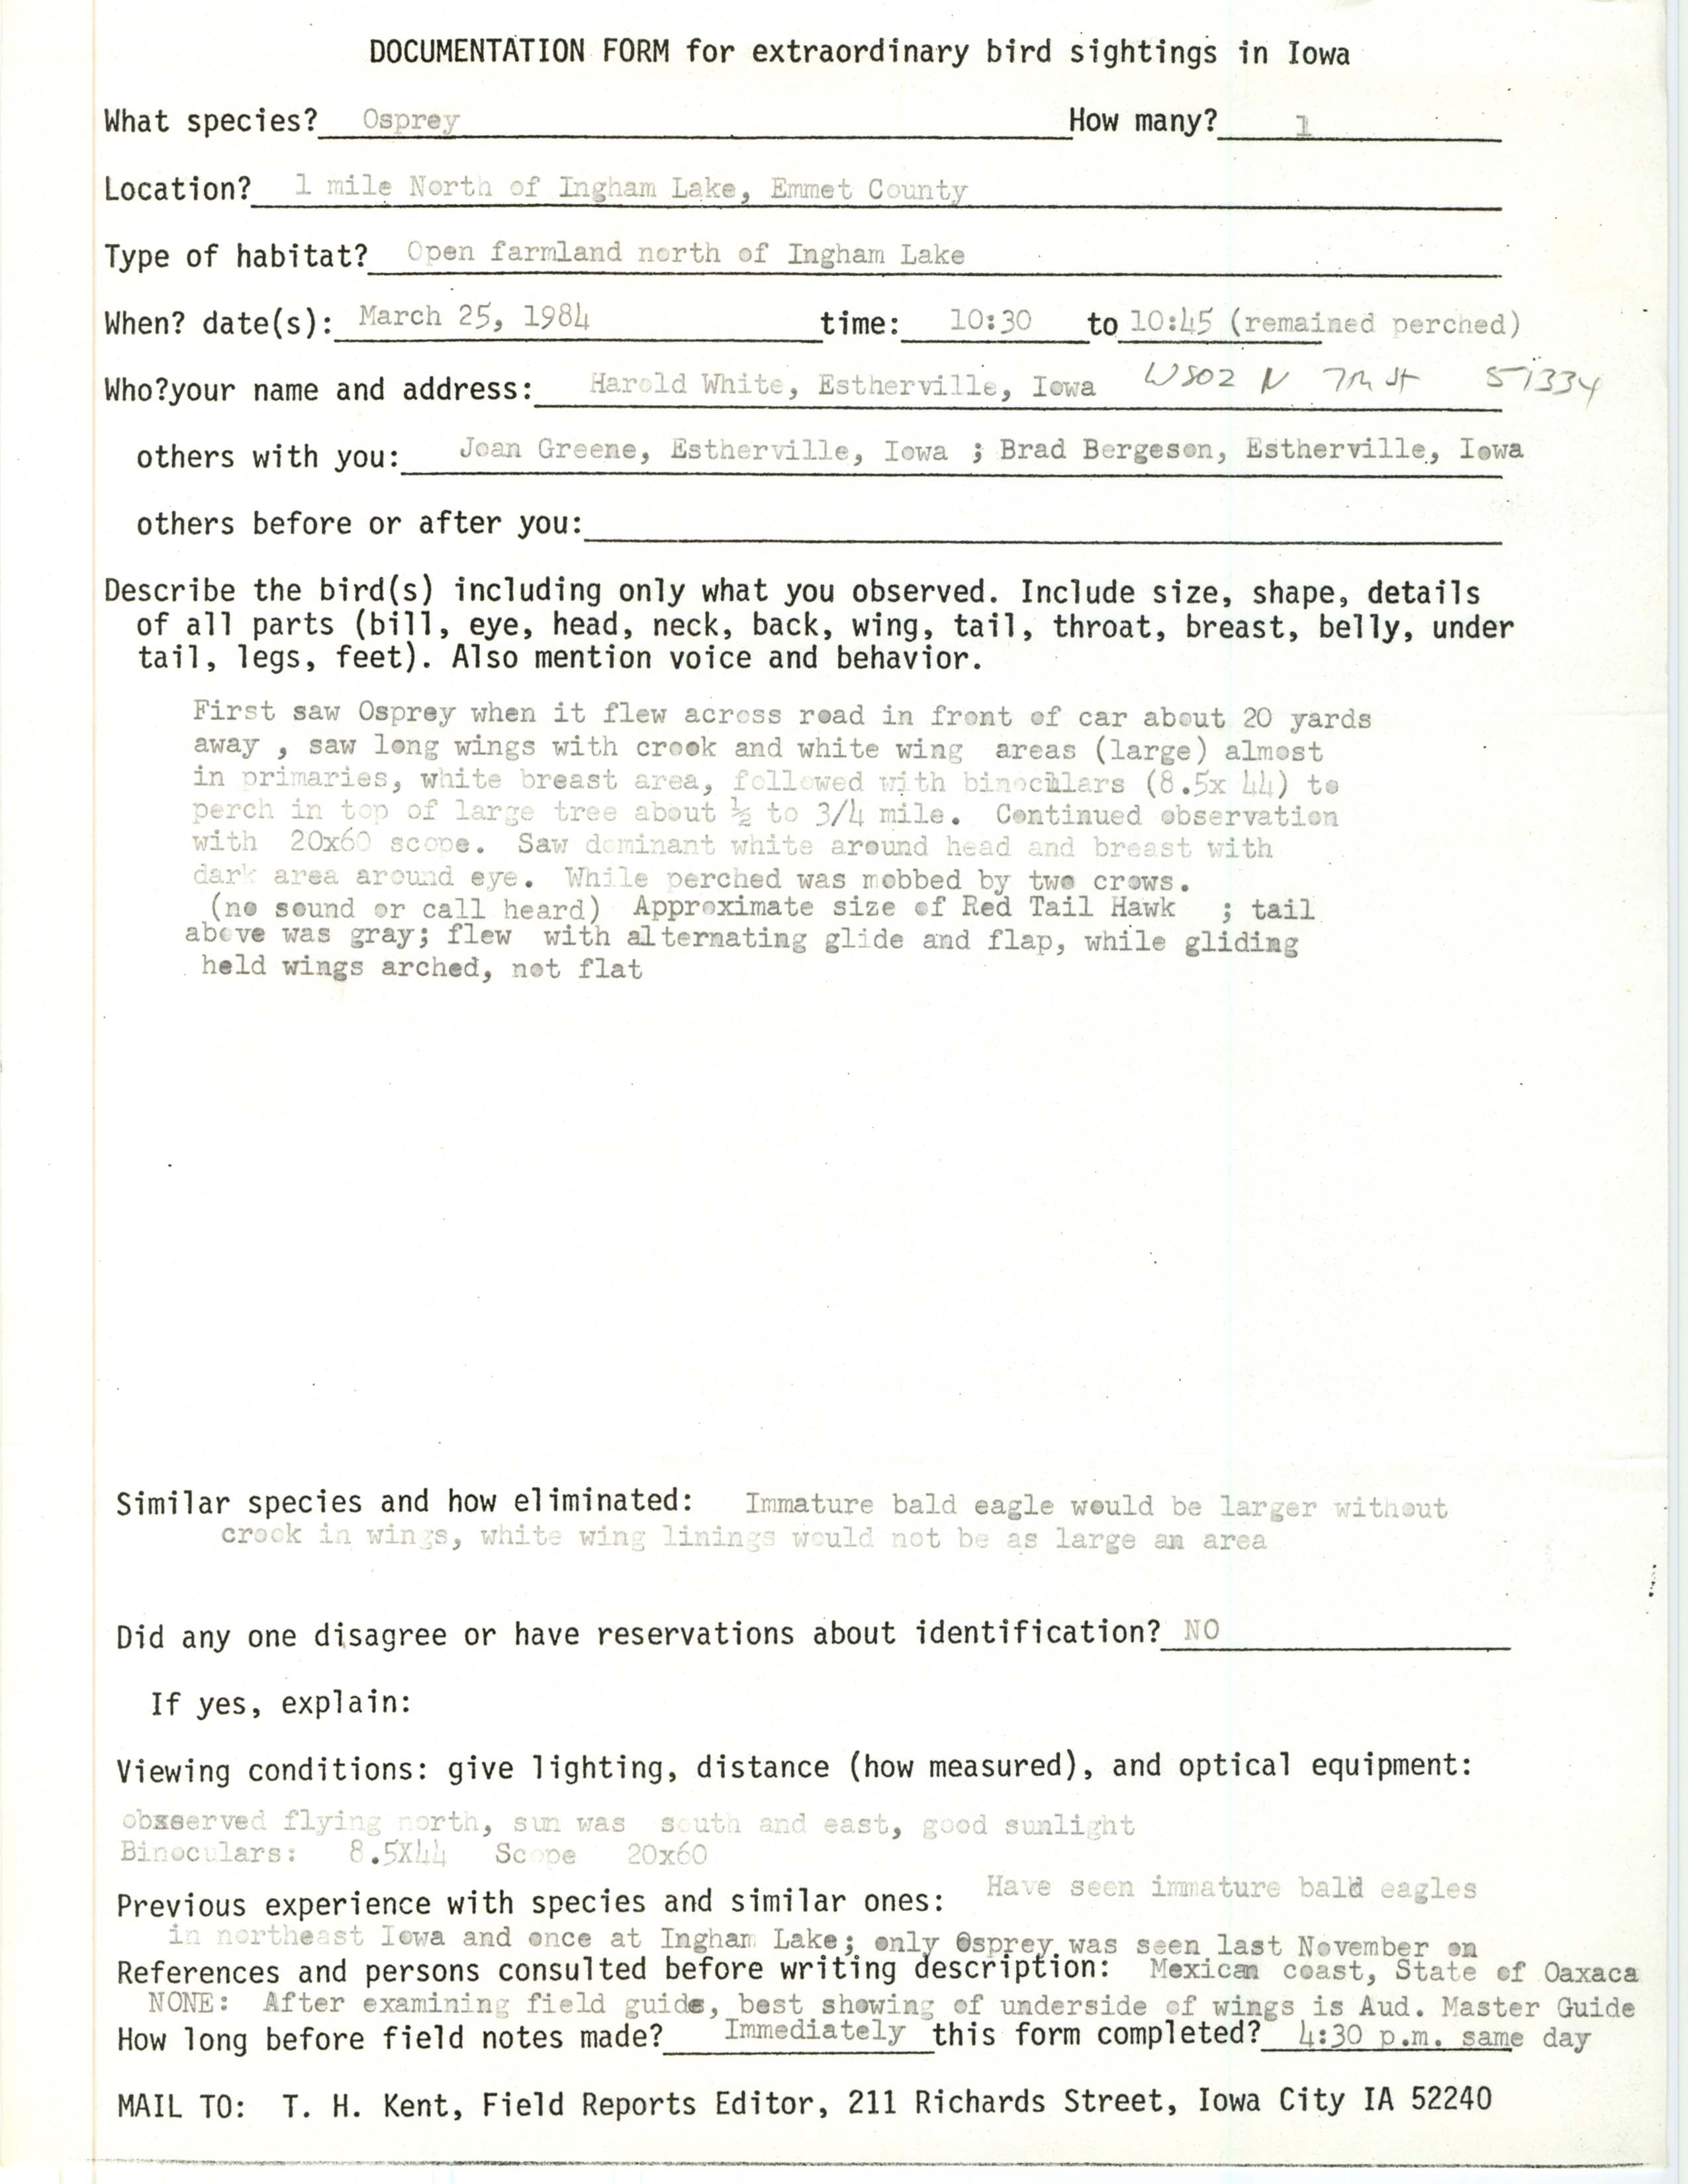 Rare bird documentation form for Osprey at Ingham Lake, 1984